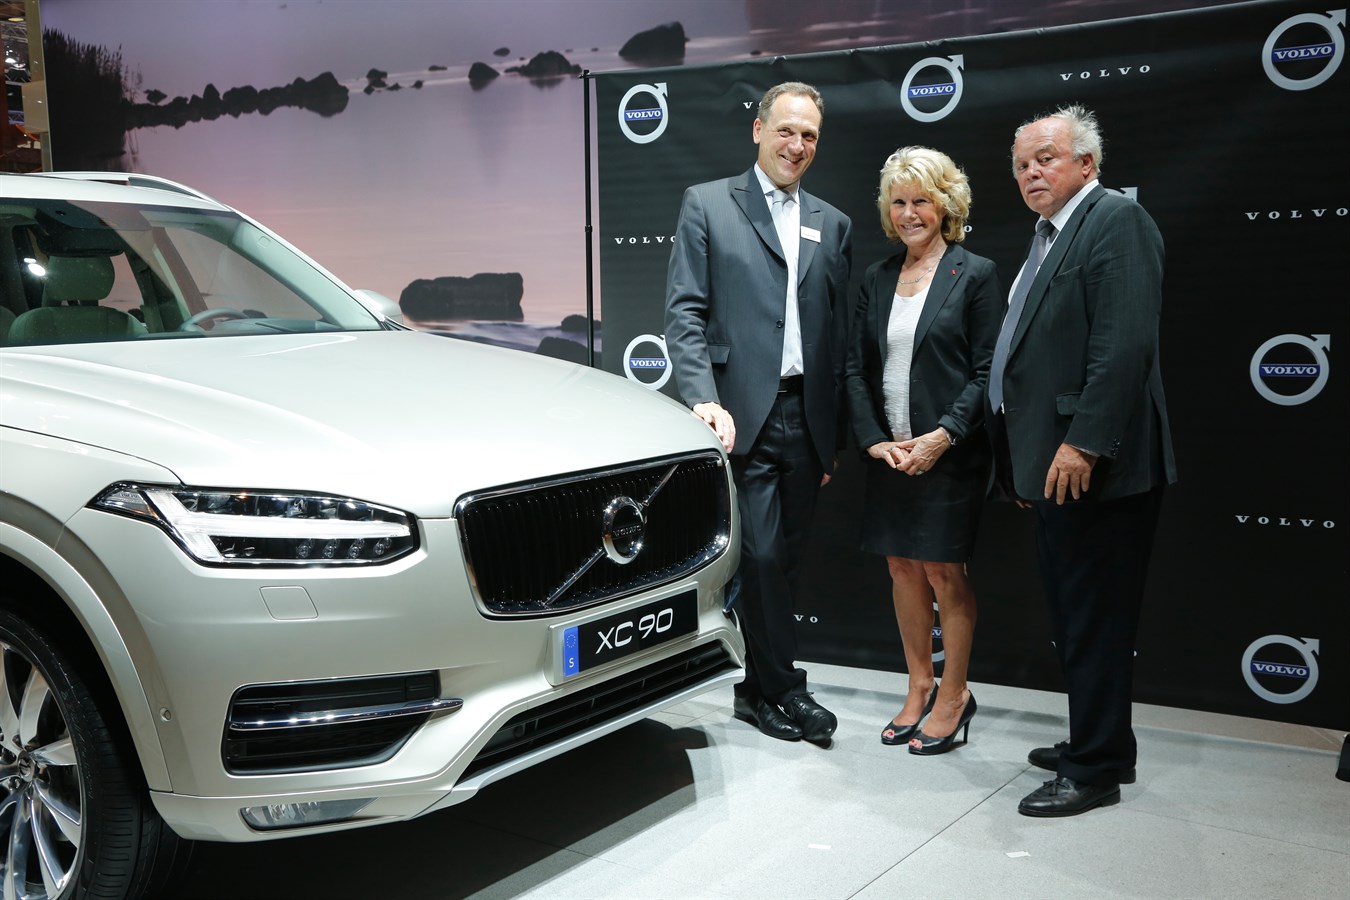 Volvo XC90 - Mondial de l'Automobile 2014 soirée VIP Yves Pasquier-Desvignes & Gita Paterson & Gudmar Olovson